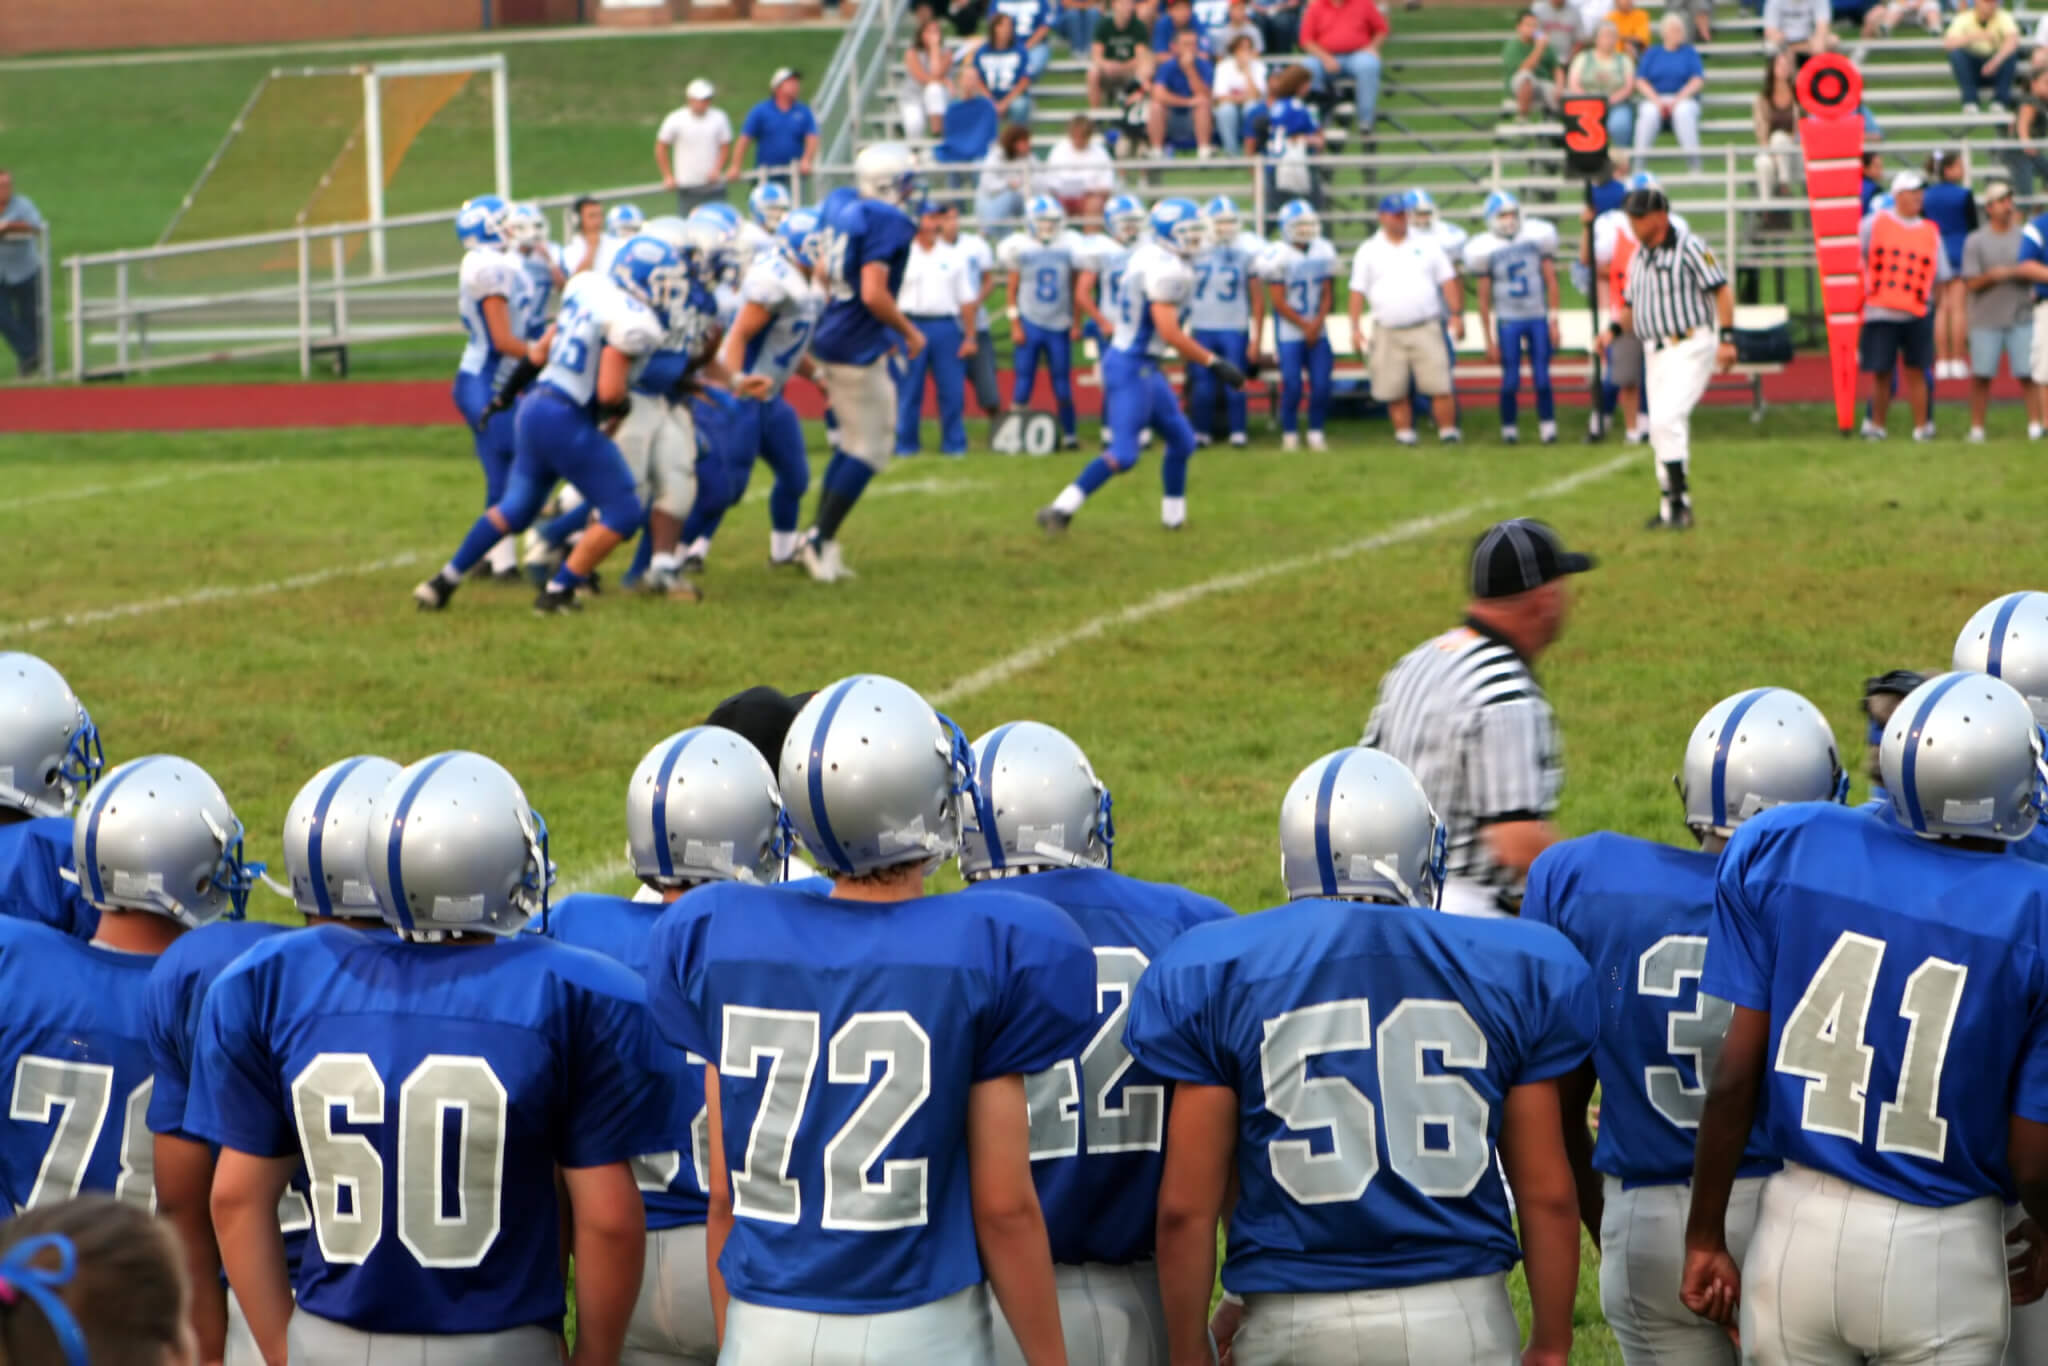 high school football team showing uniform numbers